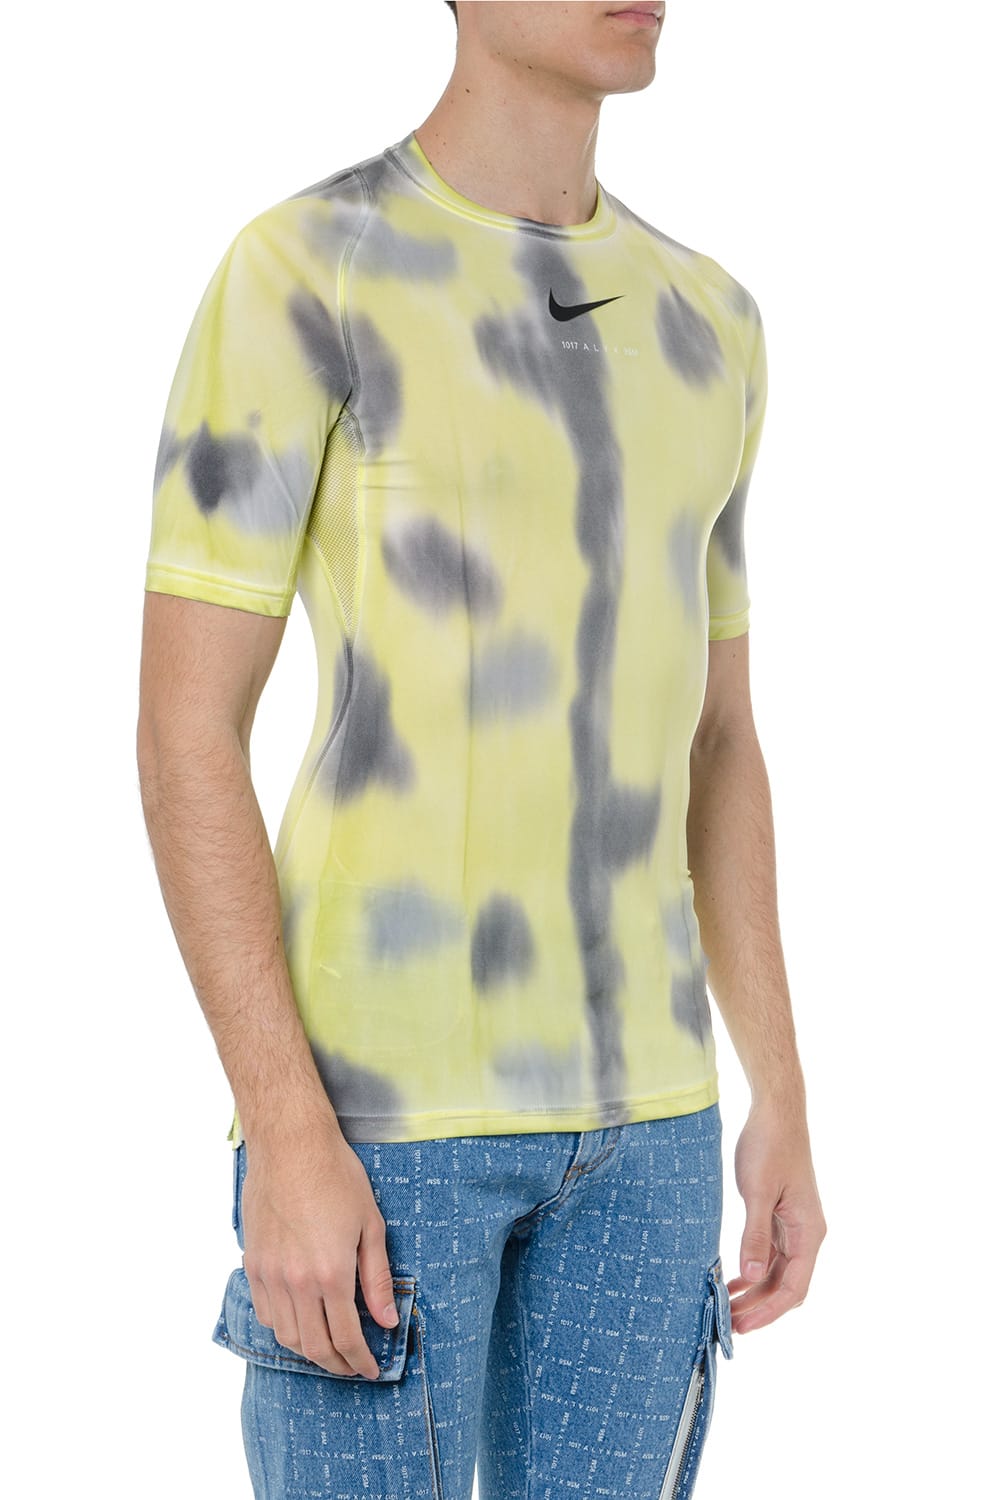 Alyx Alyx Yellow 1017 Alyx Nike Pro Technical Fabric T-shirt - Yellow